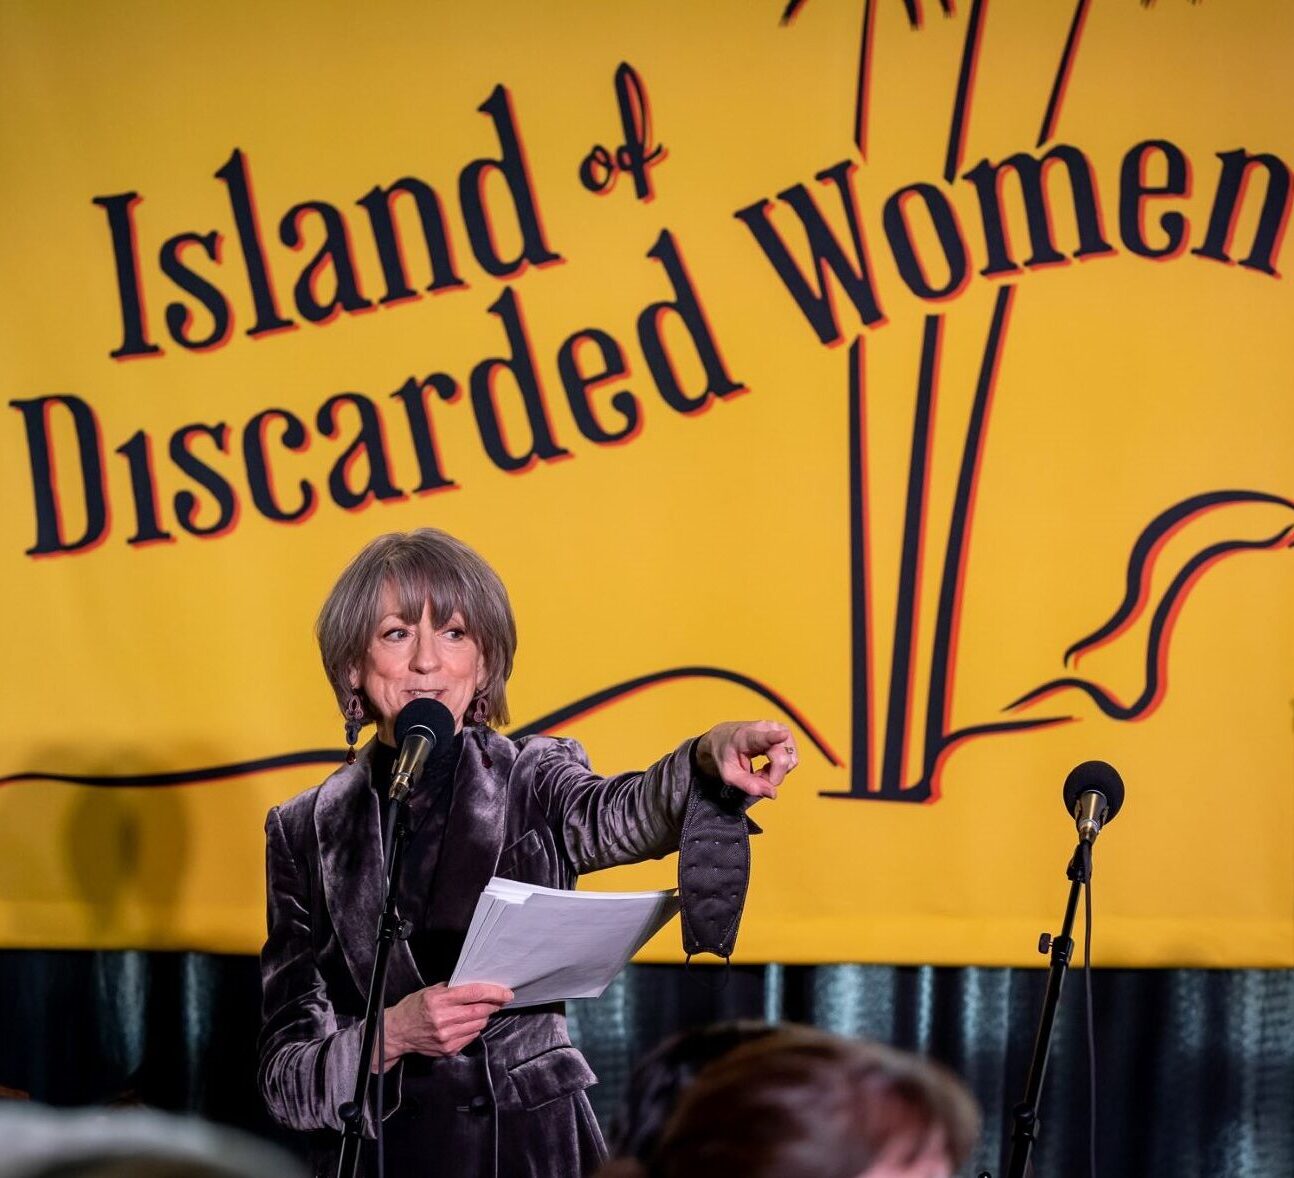 Sue hosting Island of Discarded Women February 2022